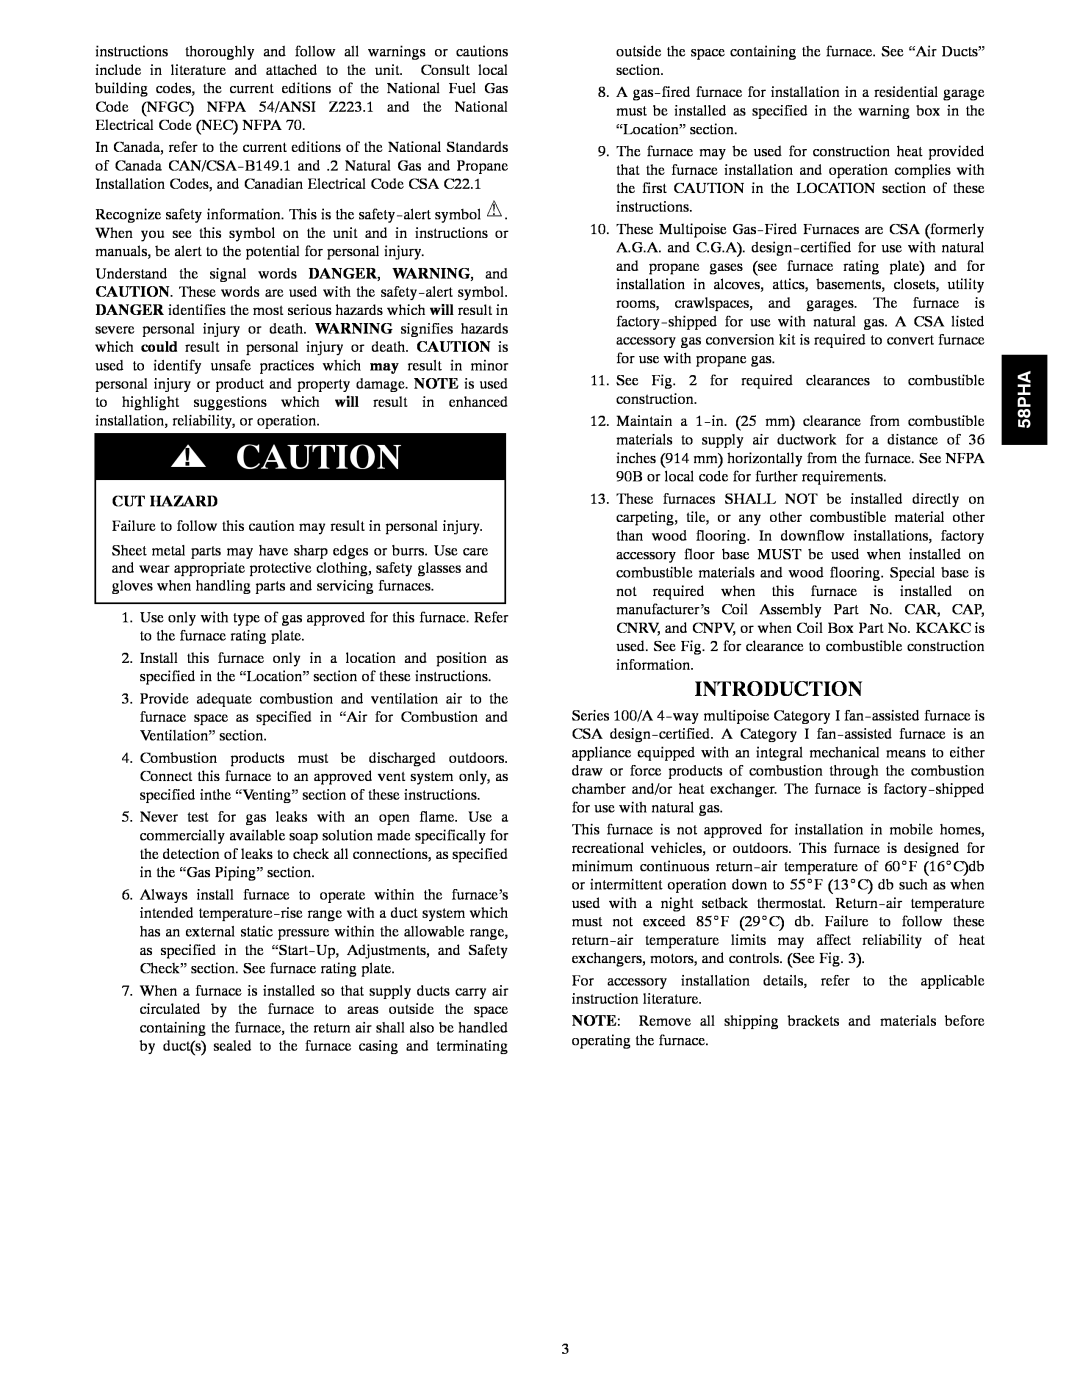 Carrier 58PHA/PHX instruction manual Introduction, Cut Hazard 